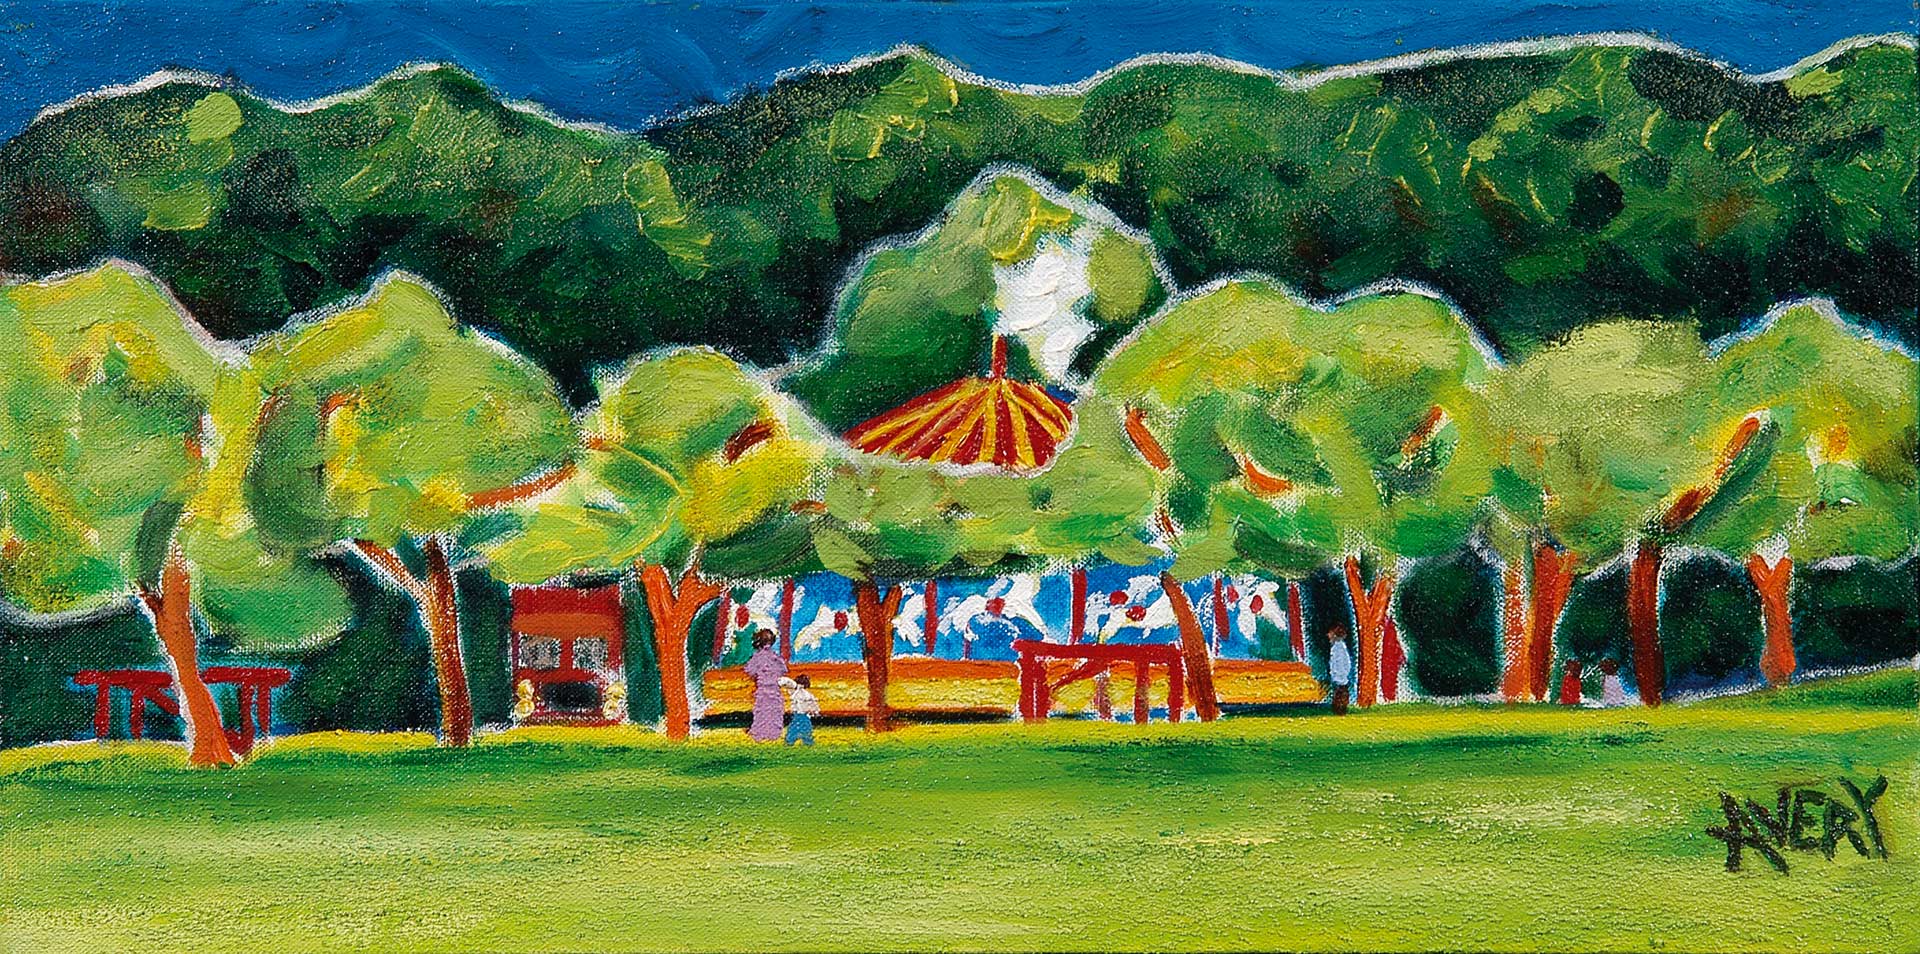 Lauren Avery Hutton | Whipsnade Carousel, oil & sand, 16x8, 2002